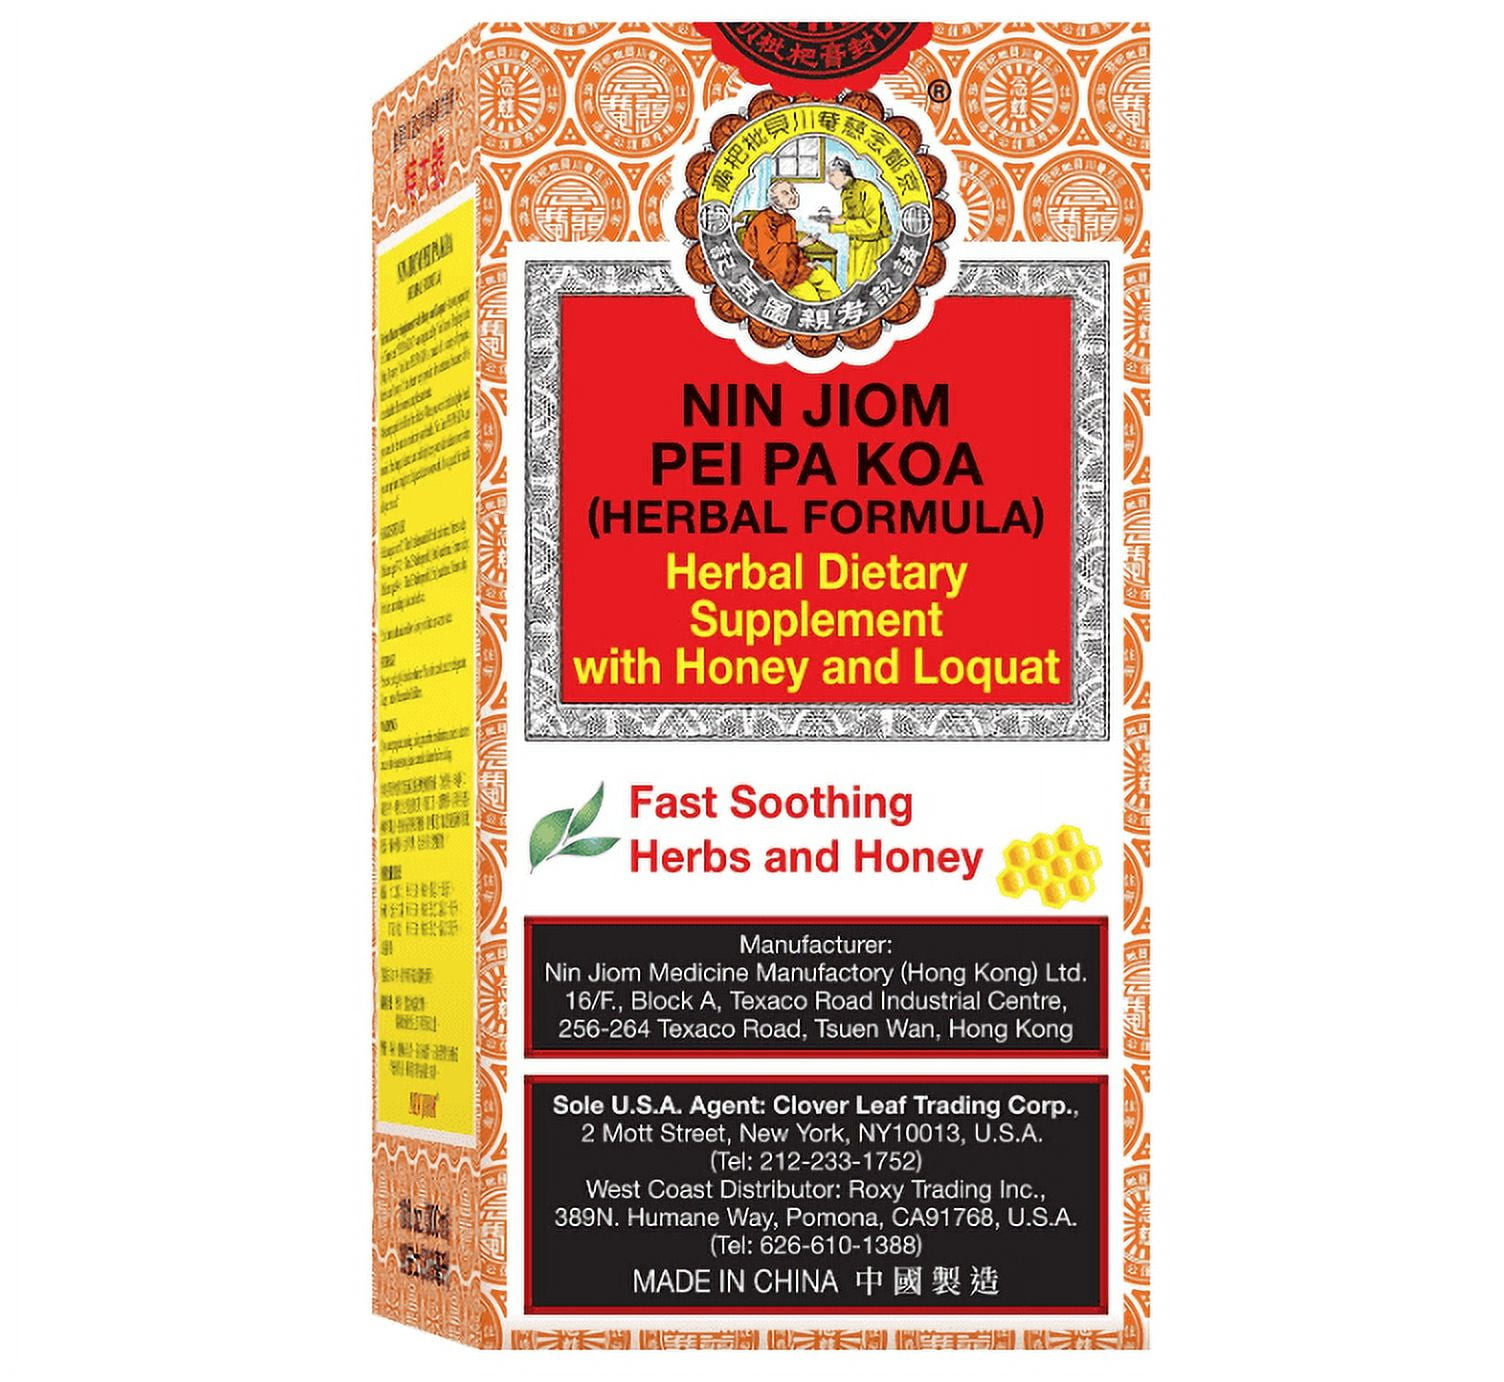 Buy Nin Jiom Pei Pa Koa Herbal Cough & Throat Syrup at